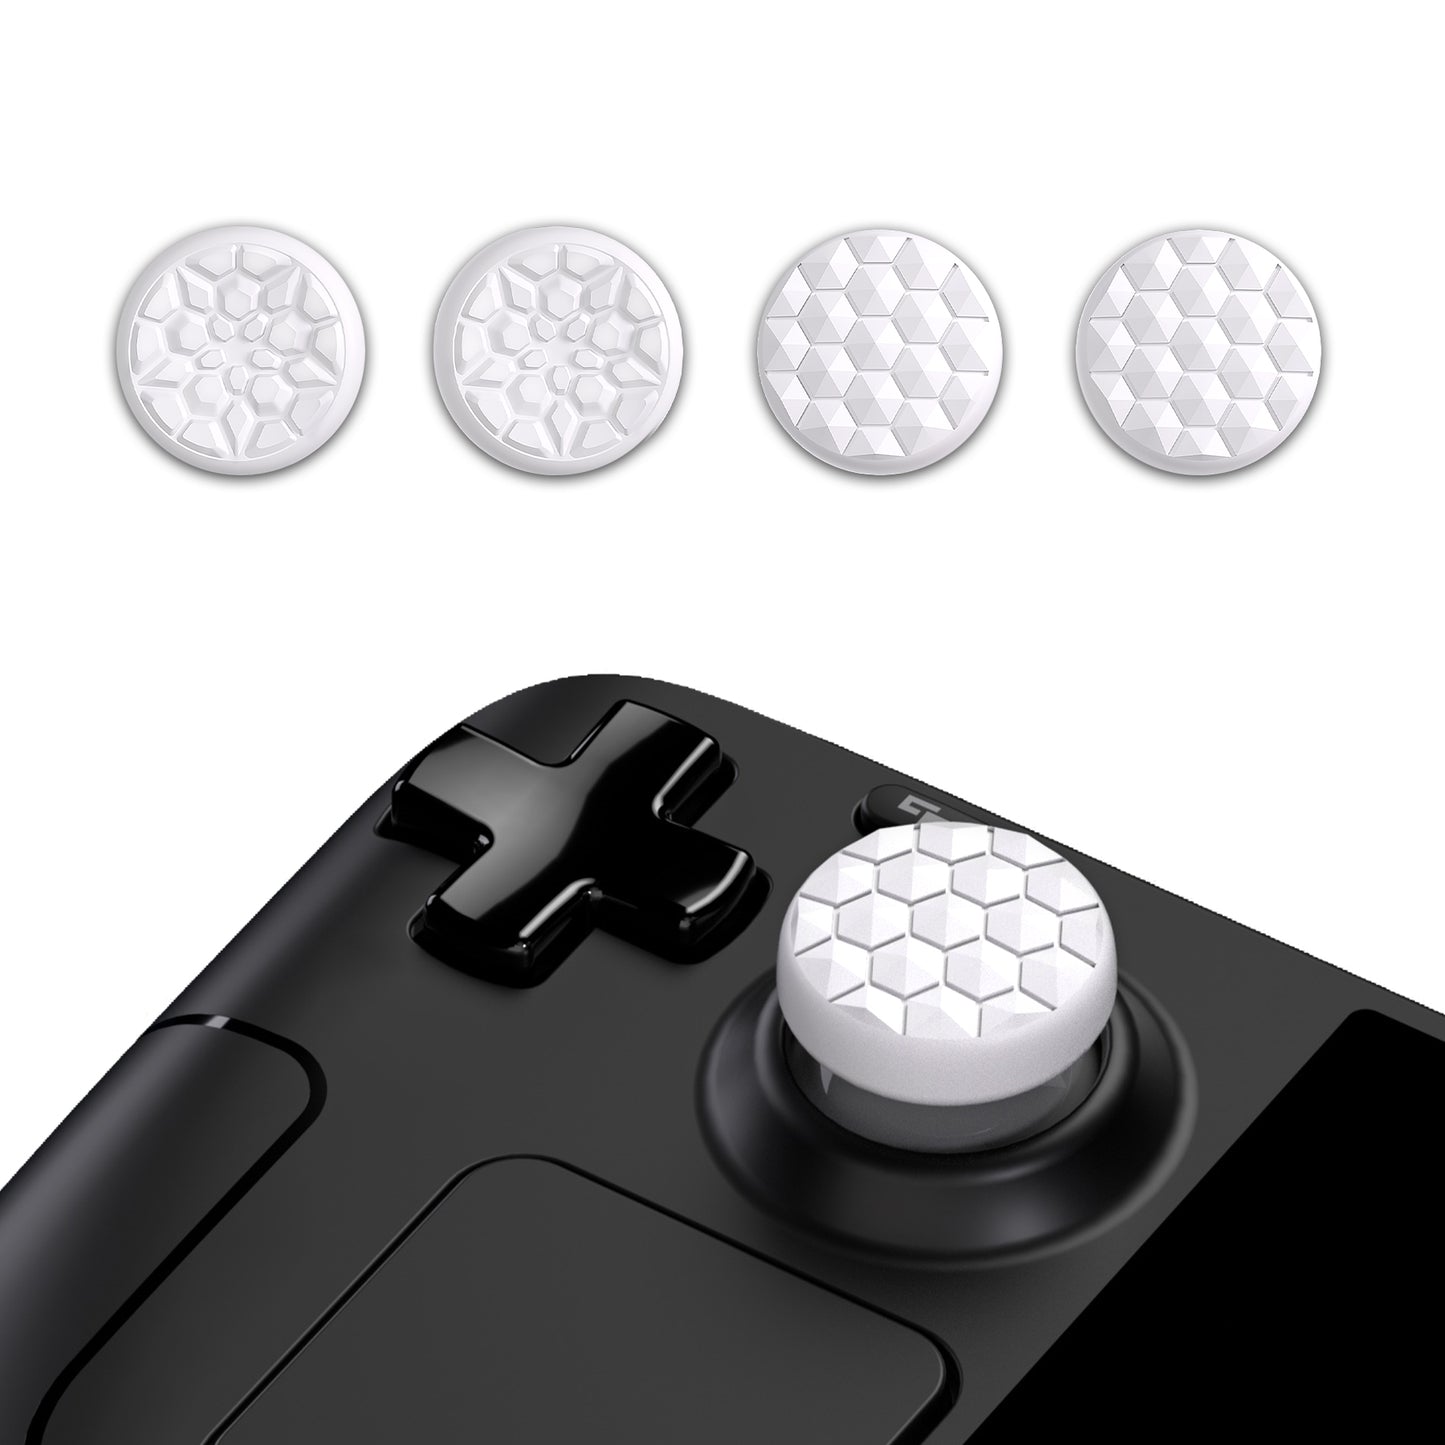 PlayVital Thumb Grip Caps for Steam Deck, Silicone Thumbsticks Grips Joystick Caps for Steam Deck - Diamond Grain & Crack Bomb Design - YFSDM0015 PlayVital